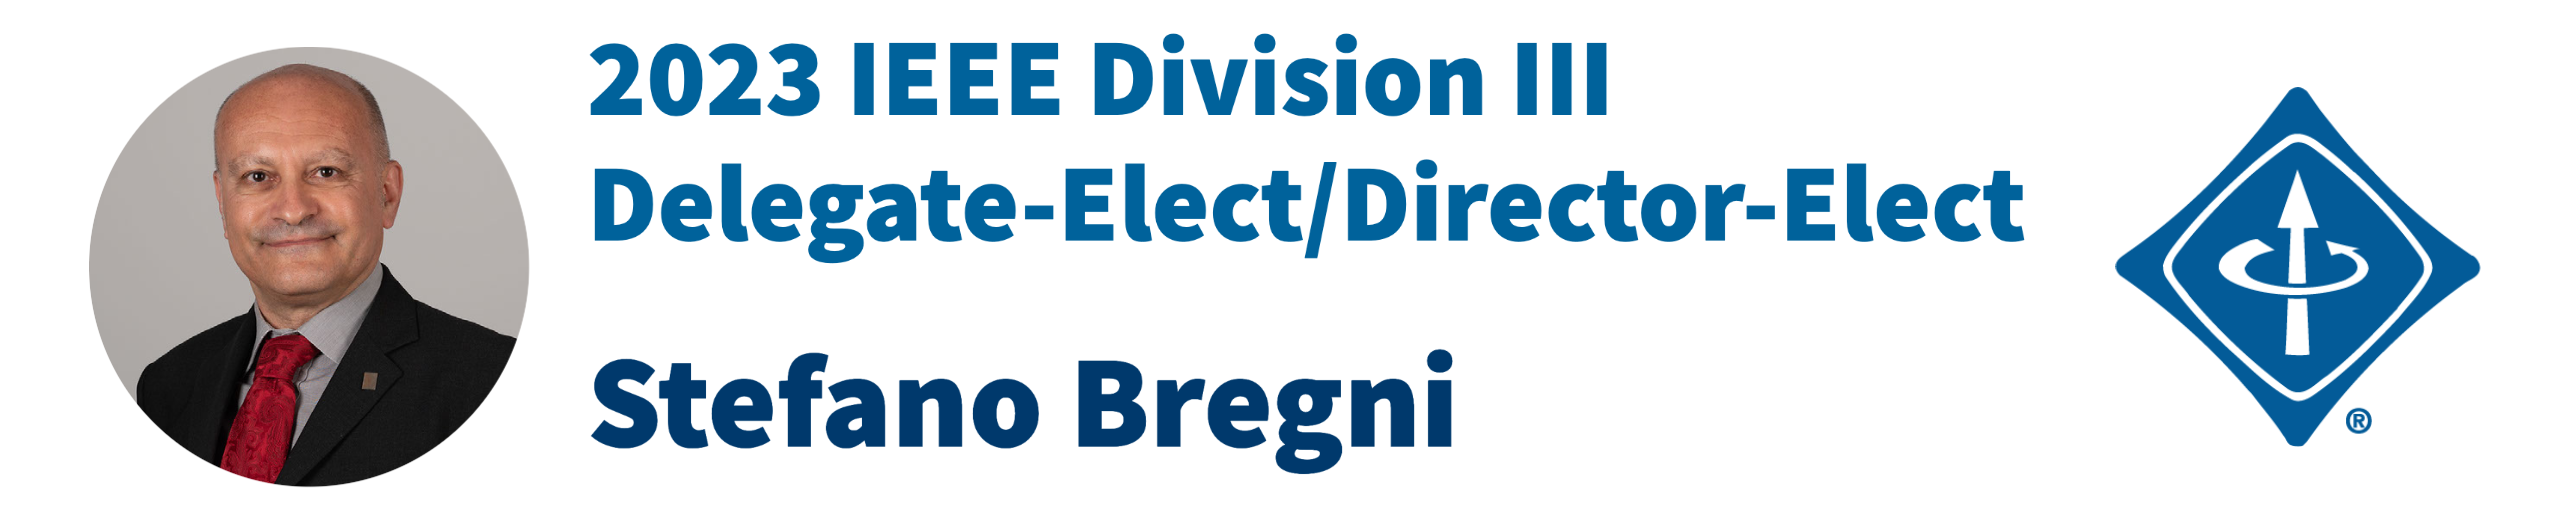 Stefano Bregni – 2023 IEEE Division III Delegate-Elect/Director-Elect